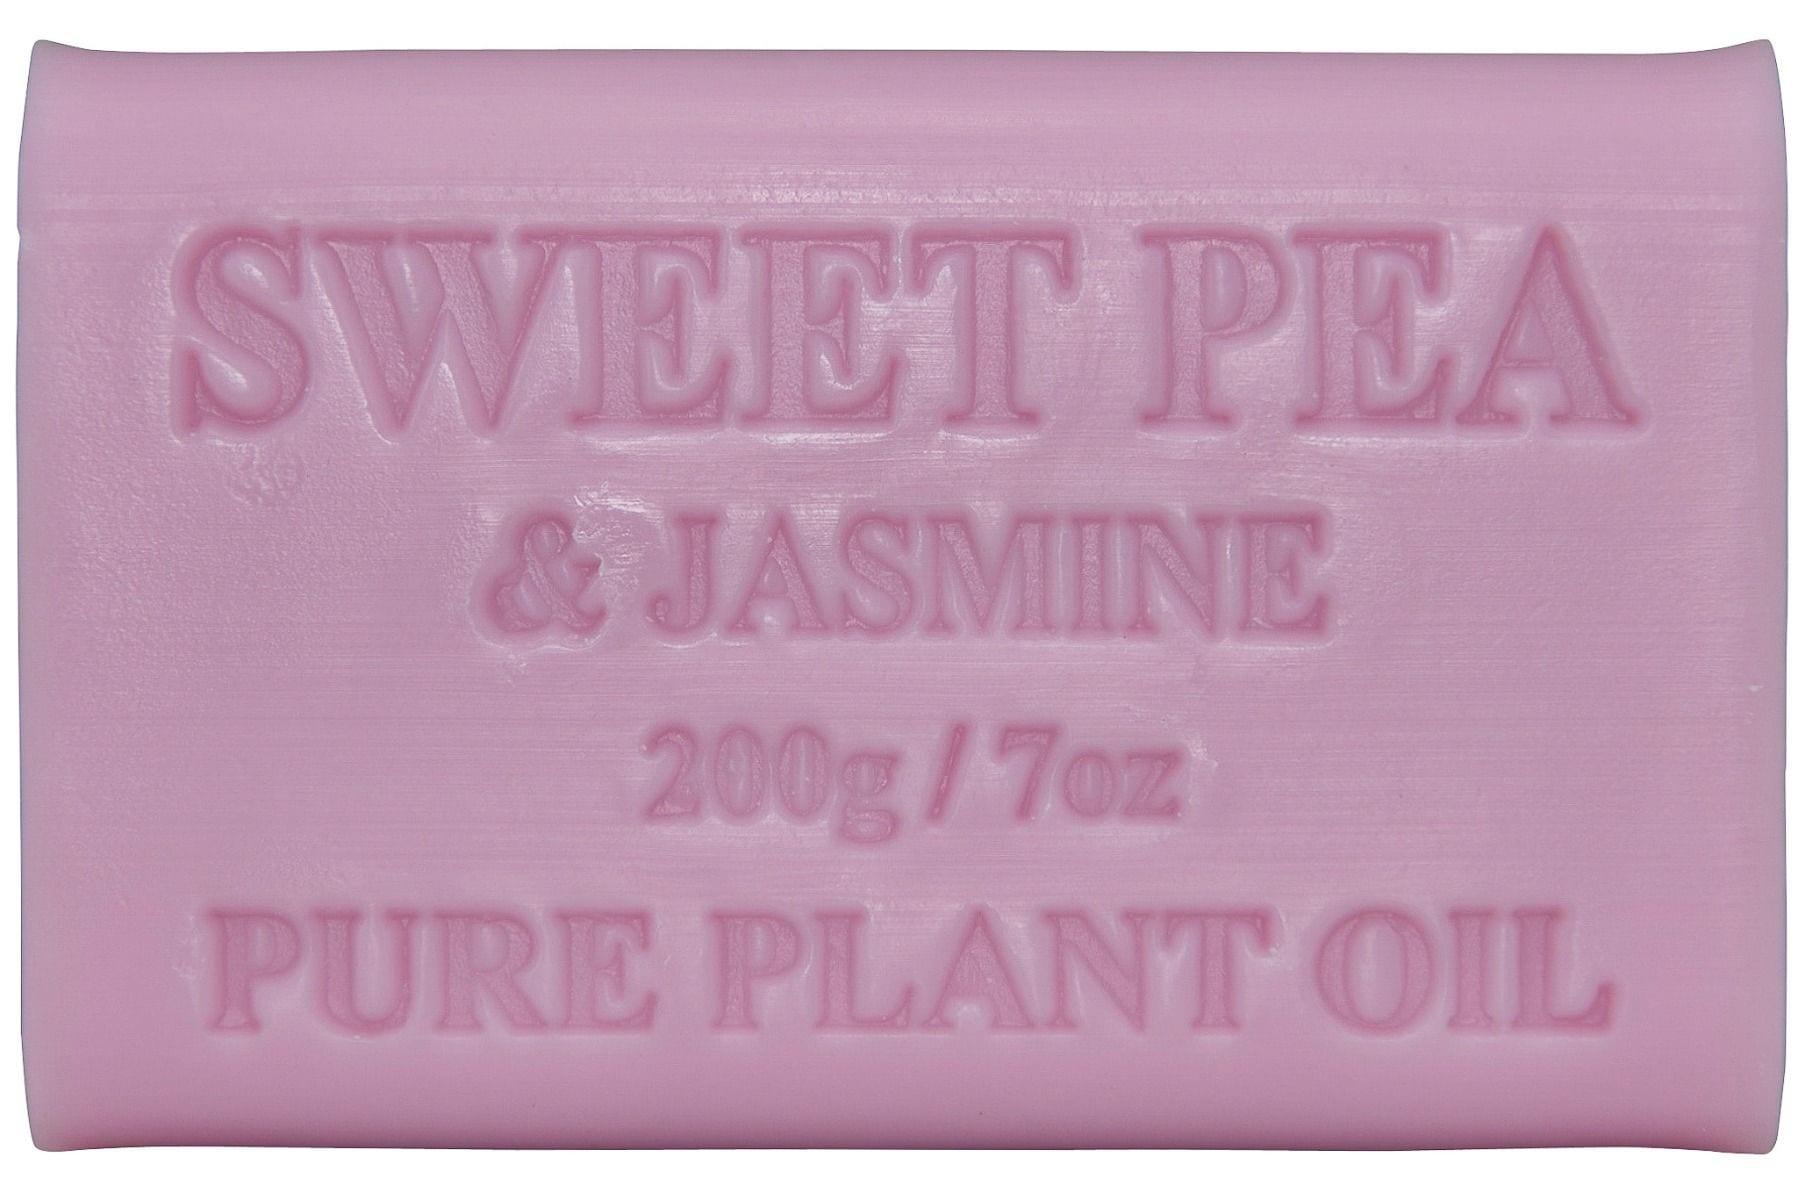 Sweet pea and jasmine soap